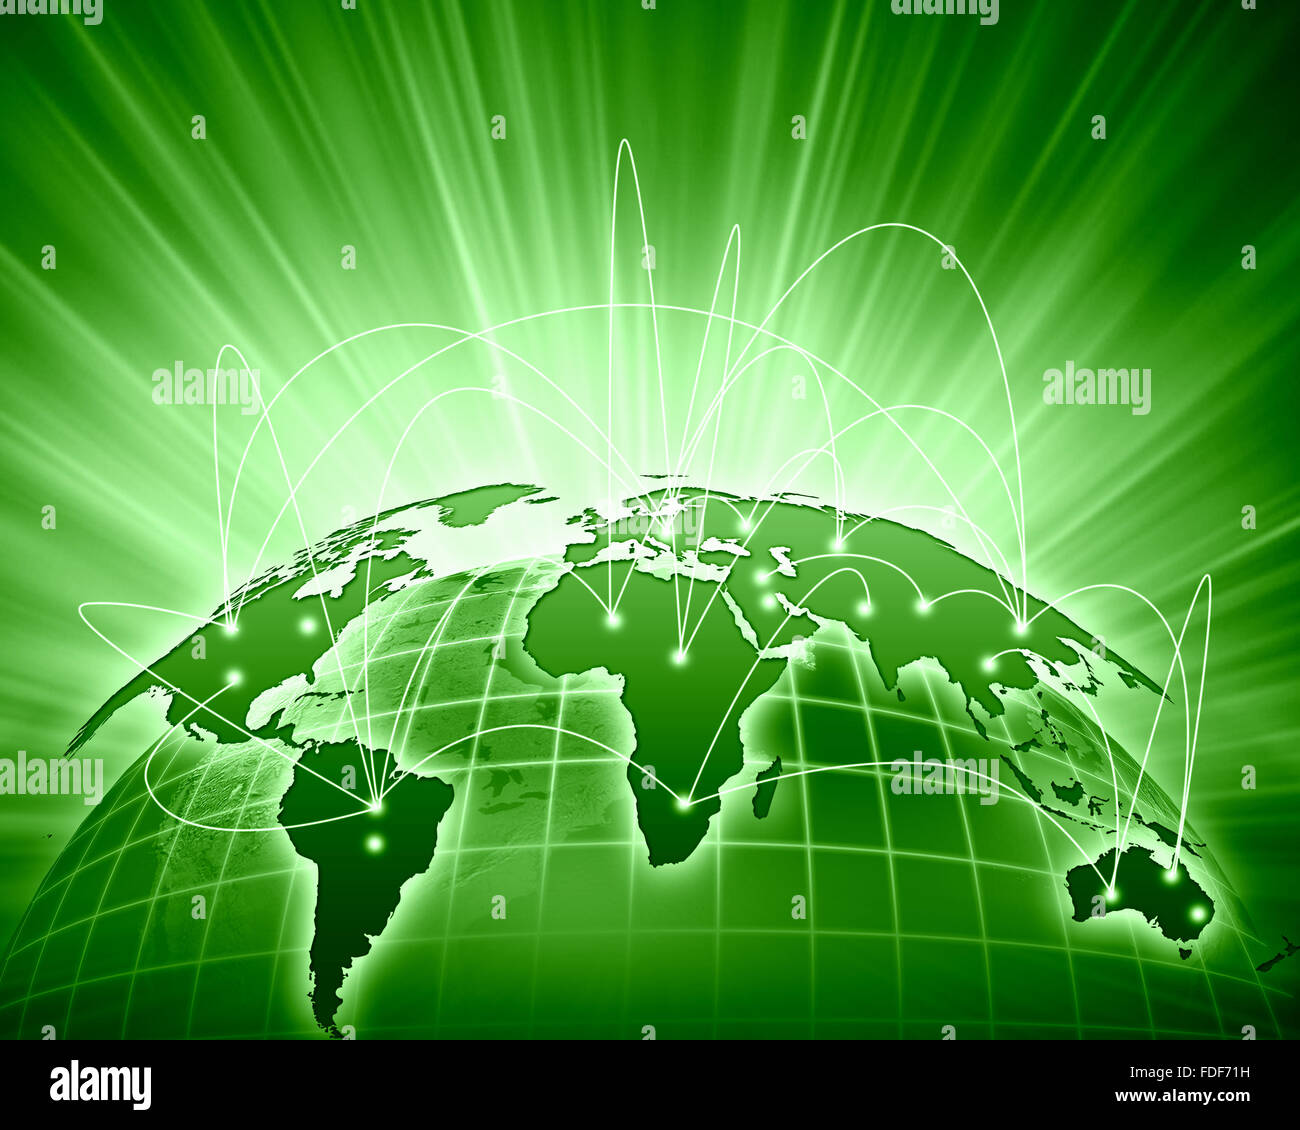 Green vivid image of globe. Globalization concept Stock Photo